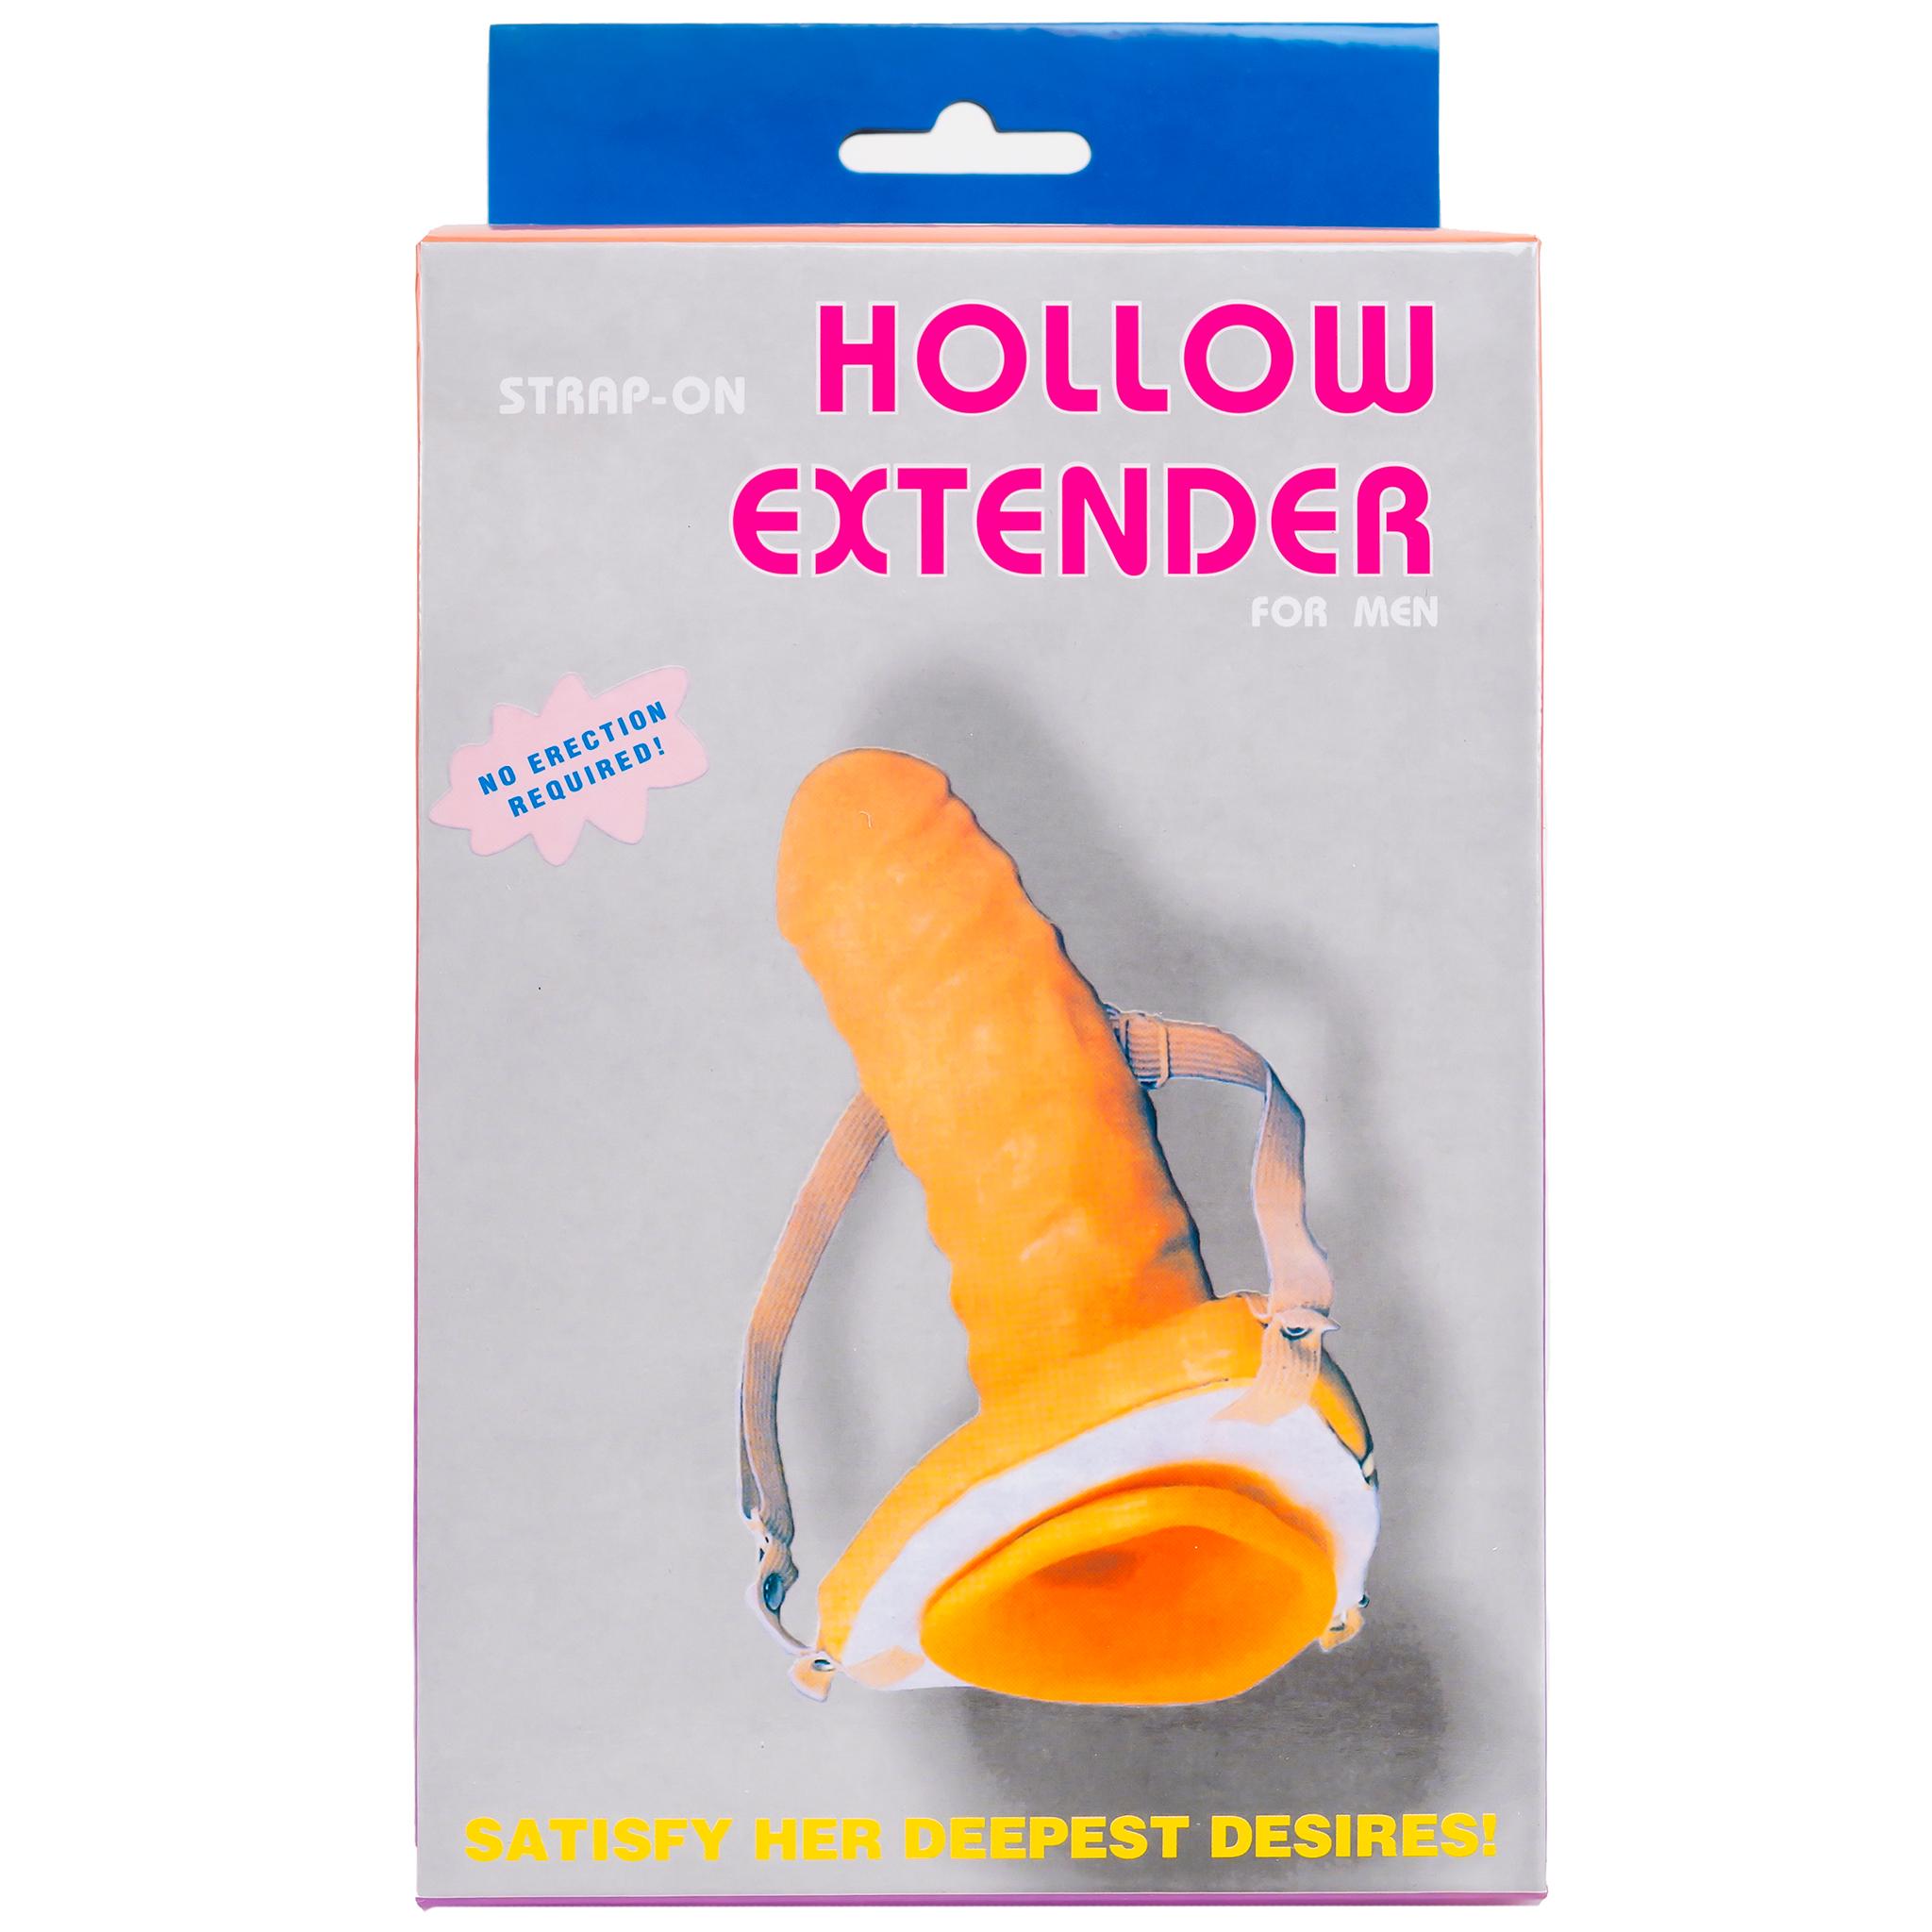 Strap-On Hollow Extender, 22 cm, Flesh